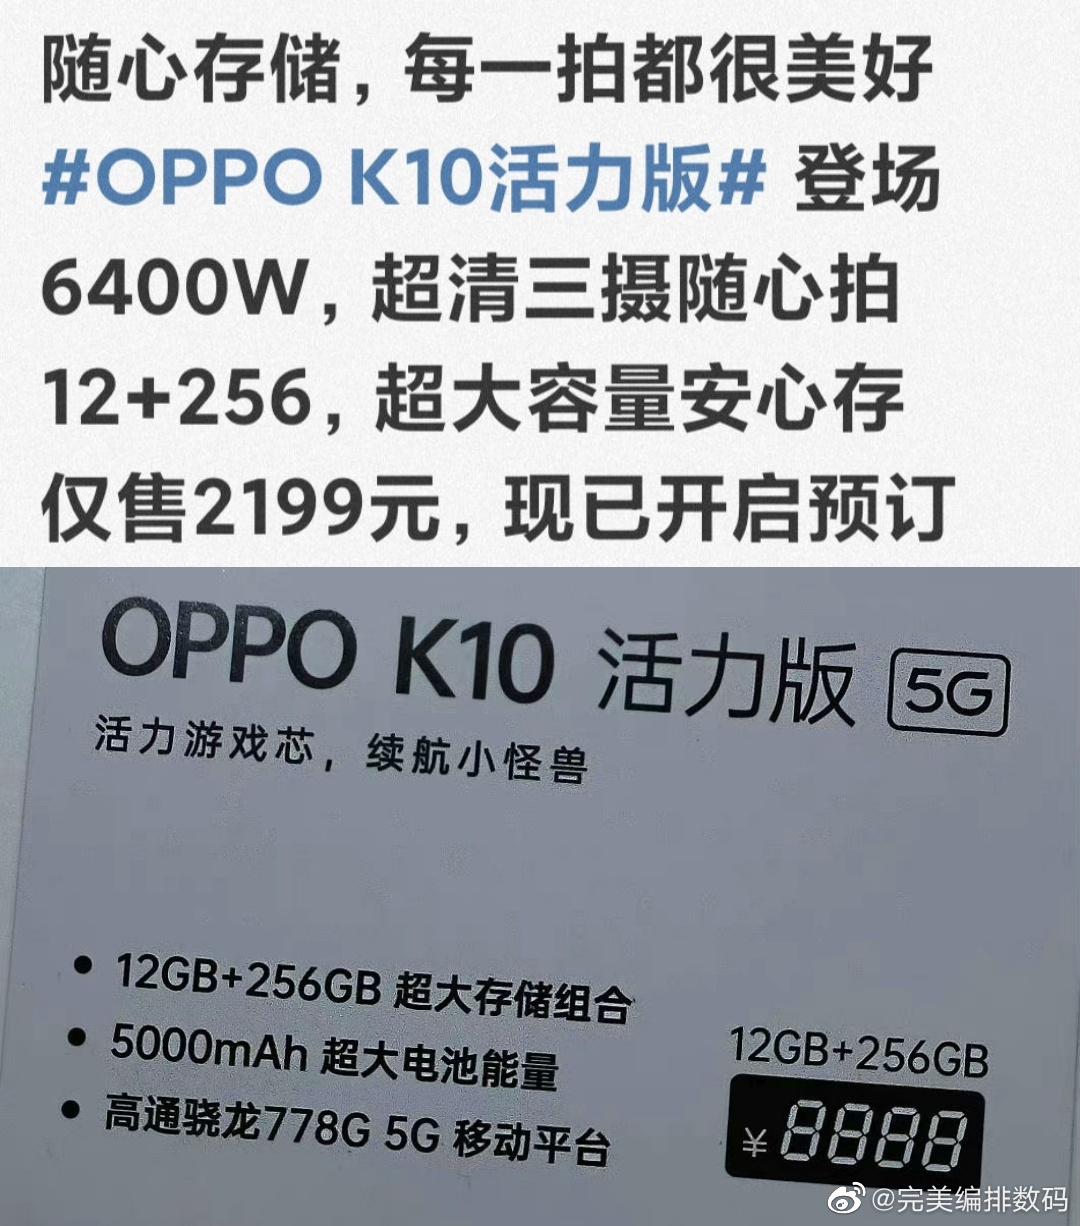 oppo k10 vitality edition 5 1080x1226x